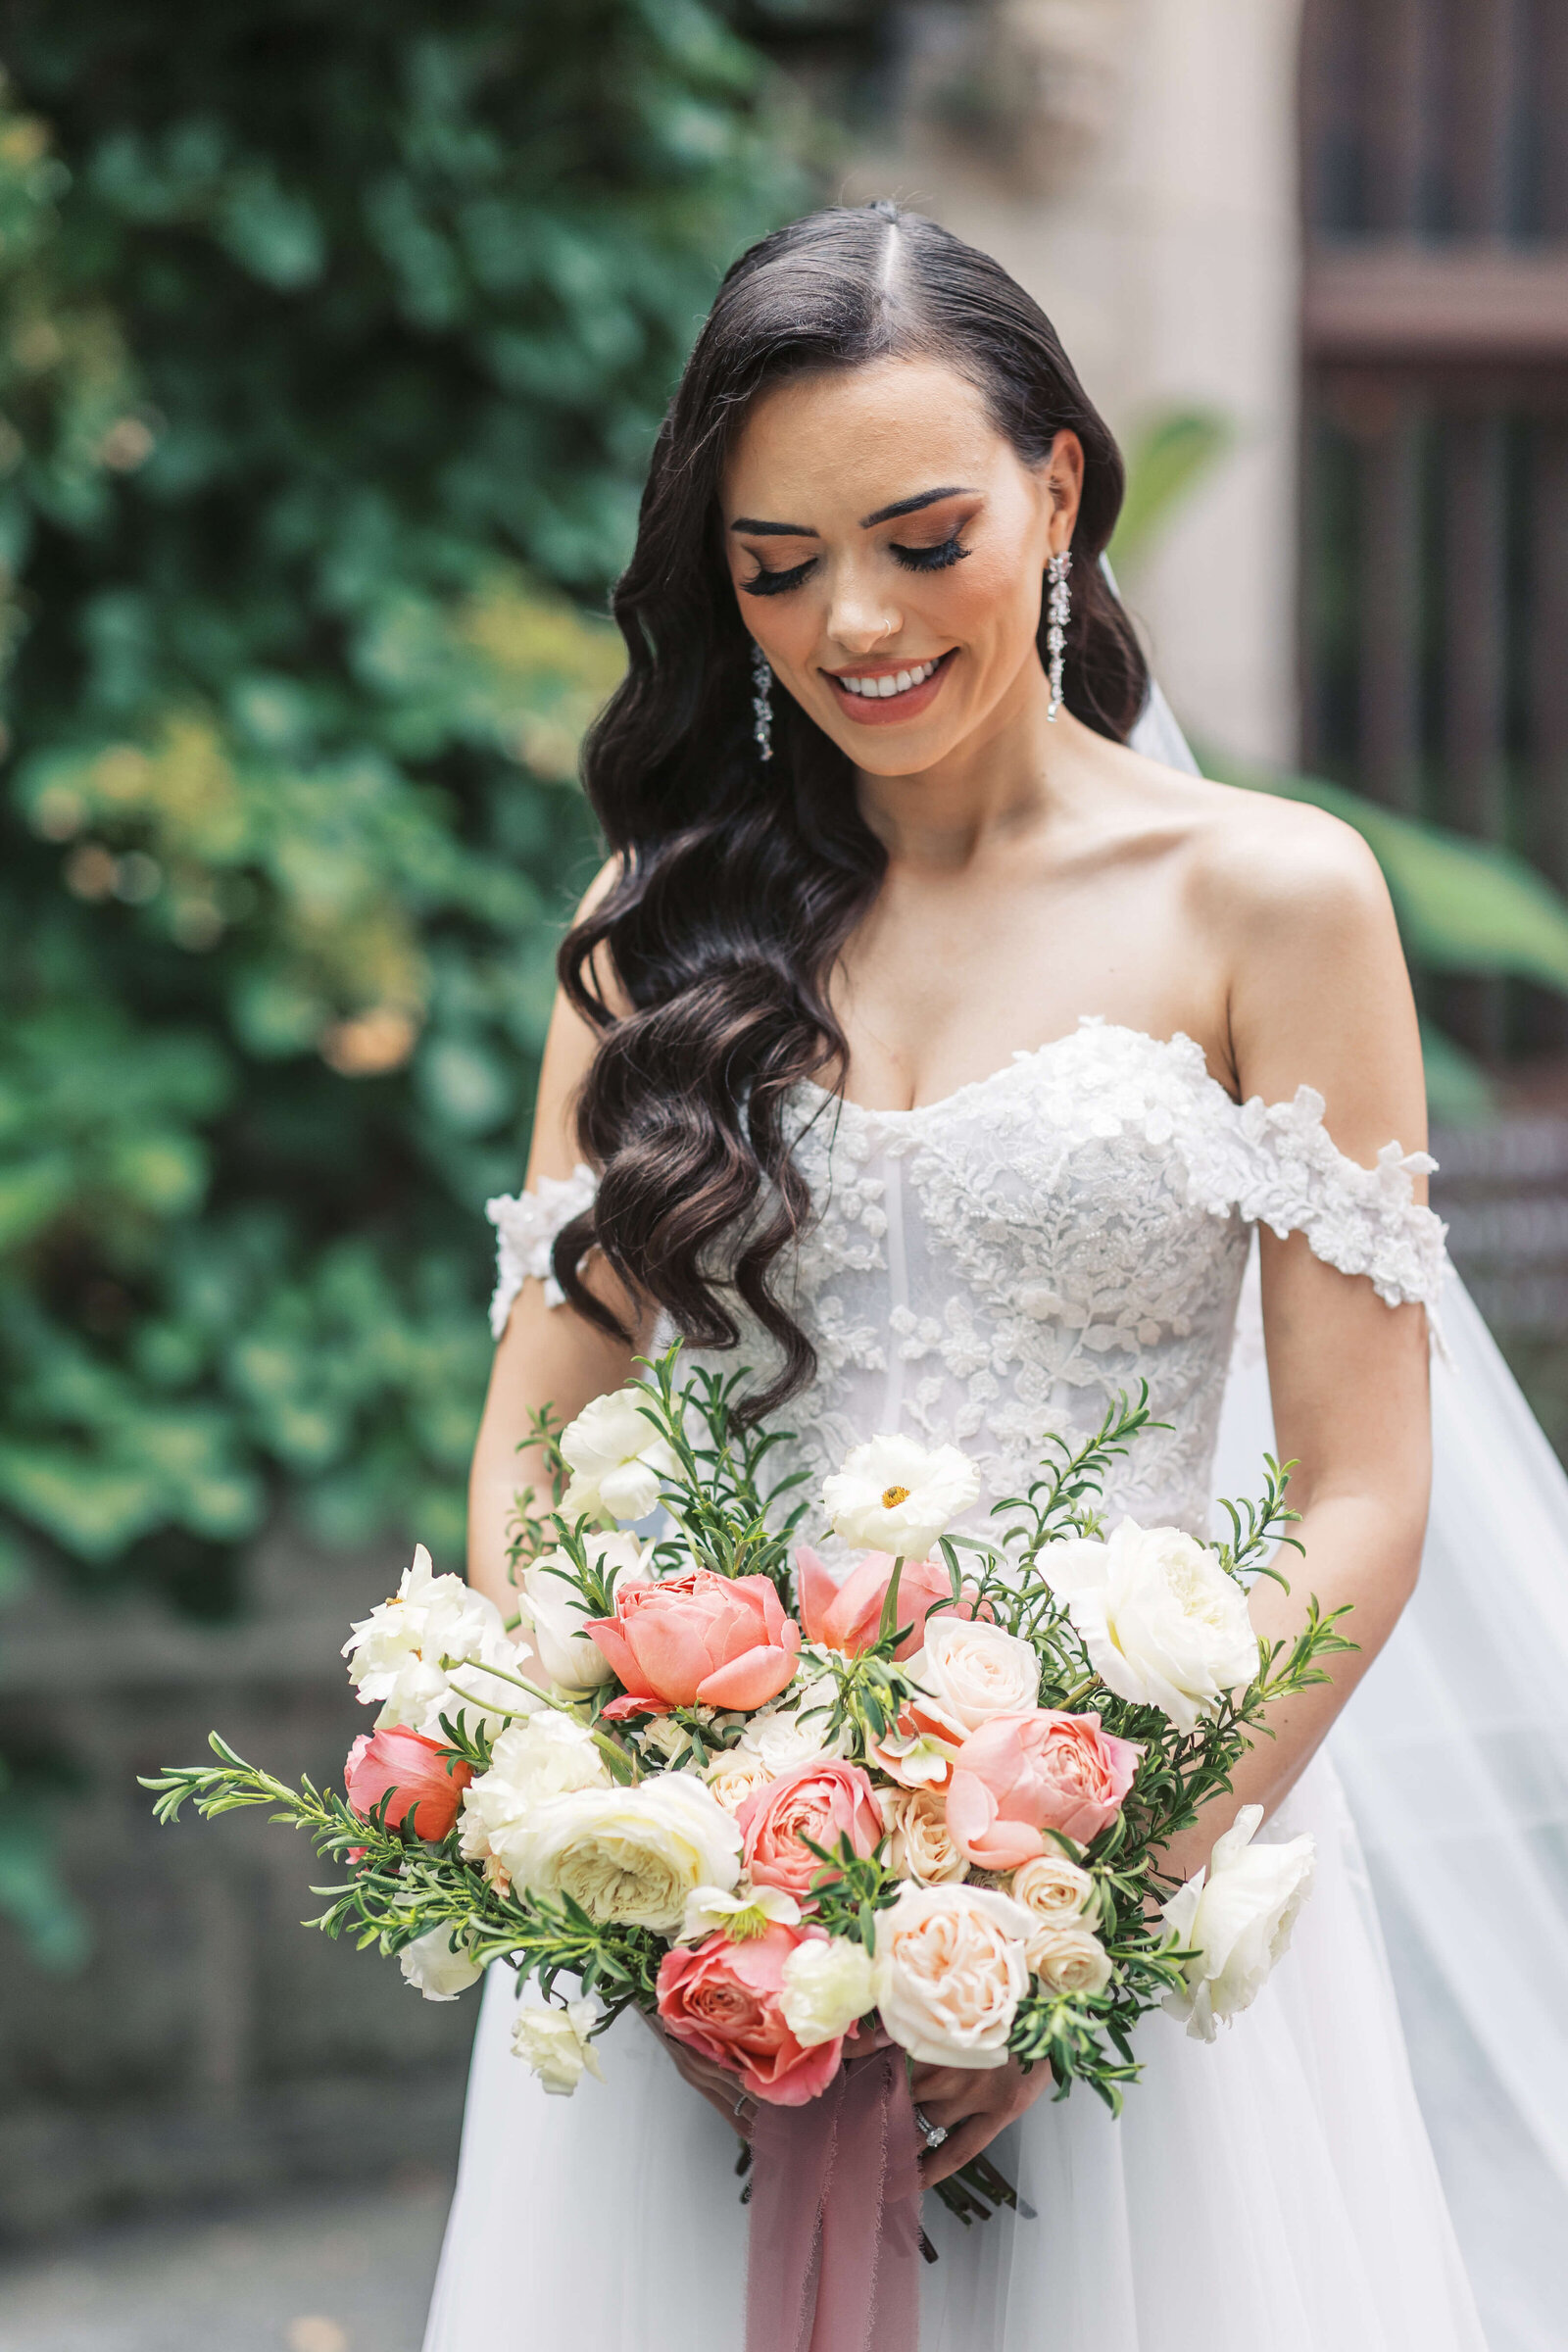 Bride admires her beautiful bouquet designed by New Jersey Florist, Bespoke Florals.